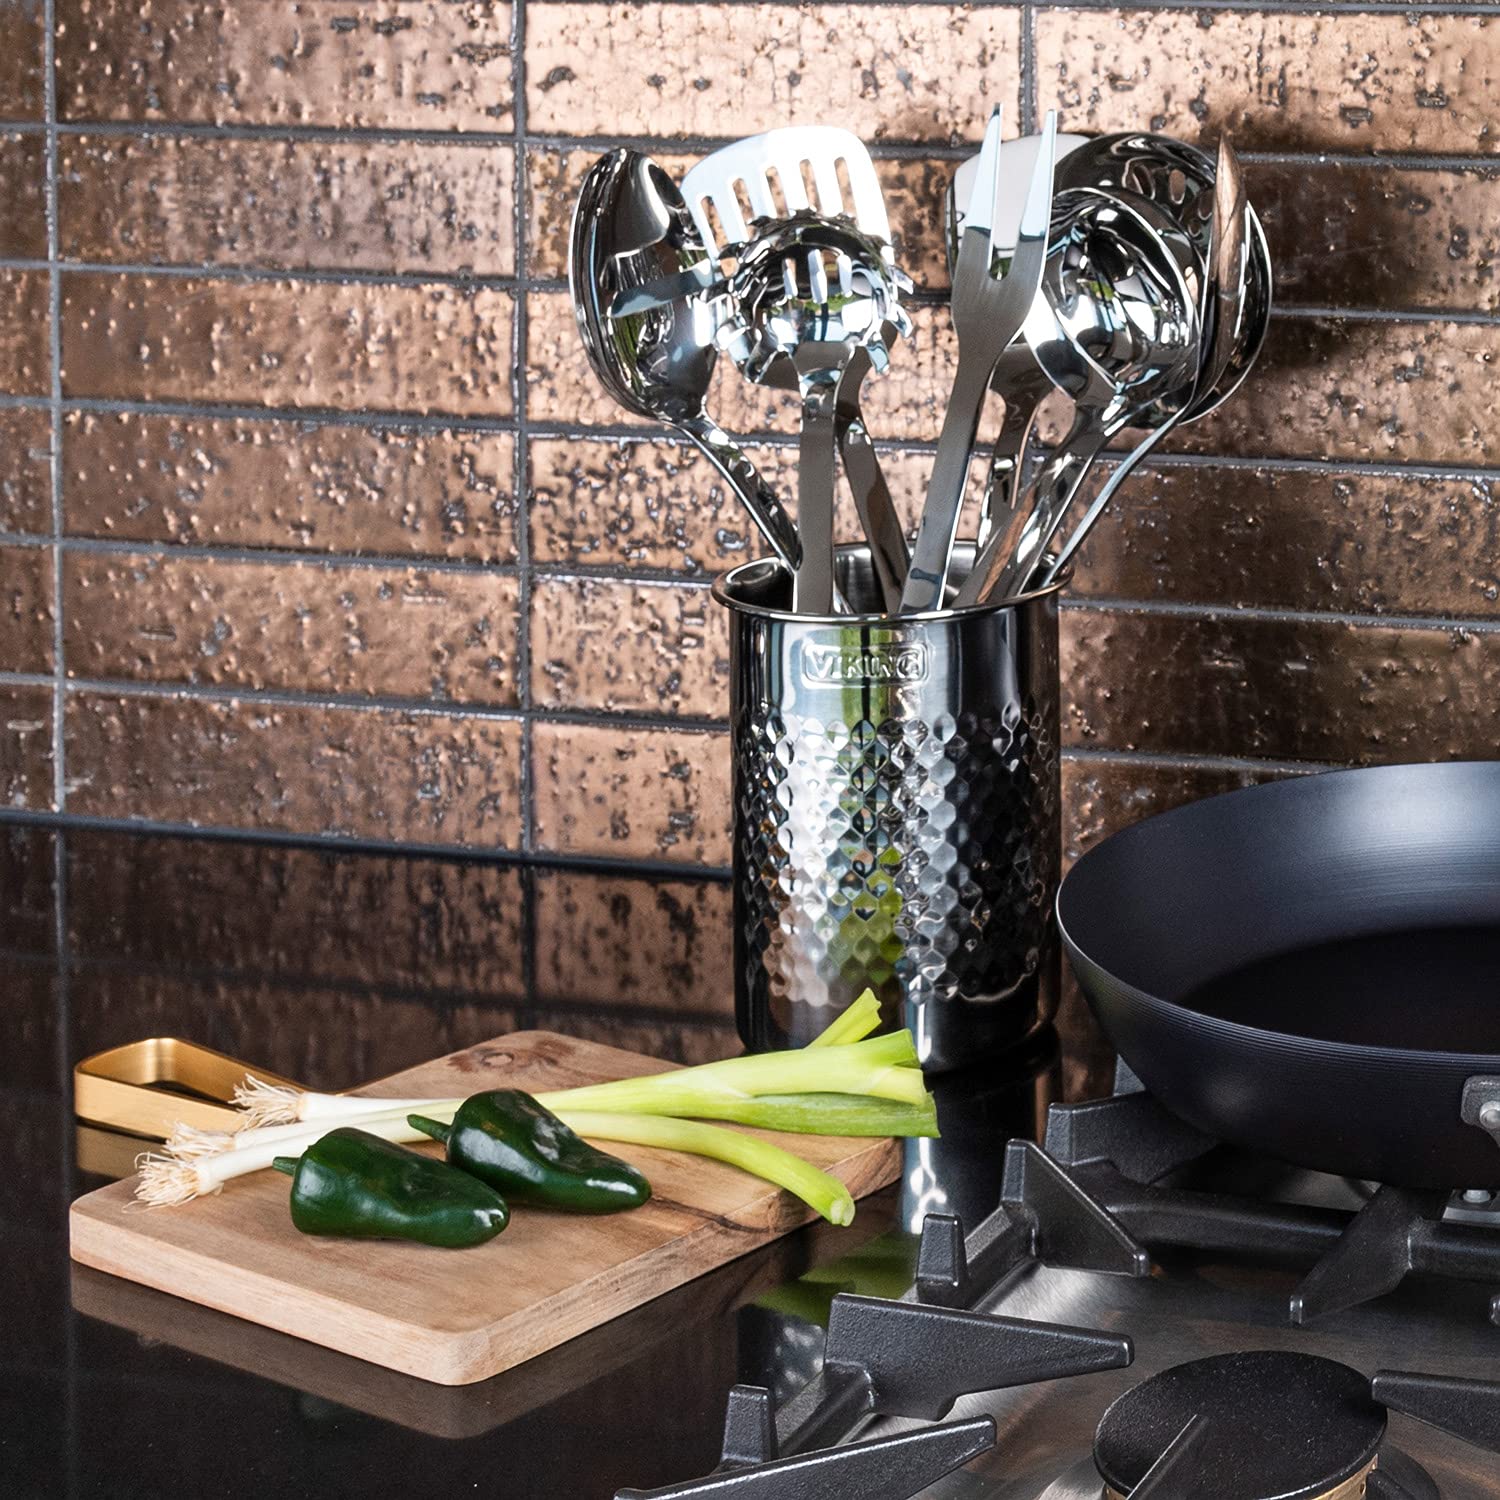 Viking Culinary 304 Stainless Steel Kitchen Utensil Set, Ergonomic Stay-Cool Handles, Dishwasher Safe, Silver, 8 Piece